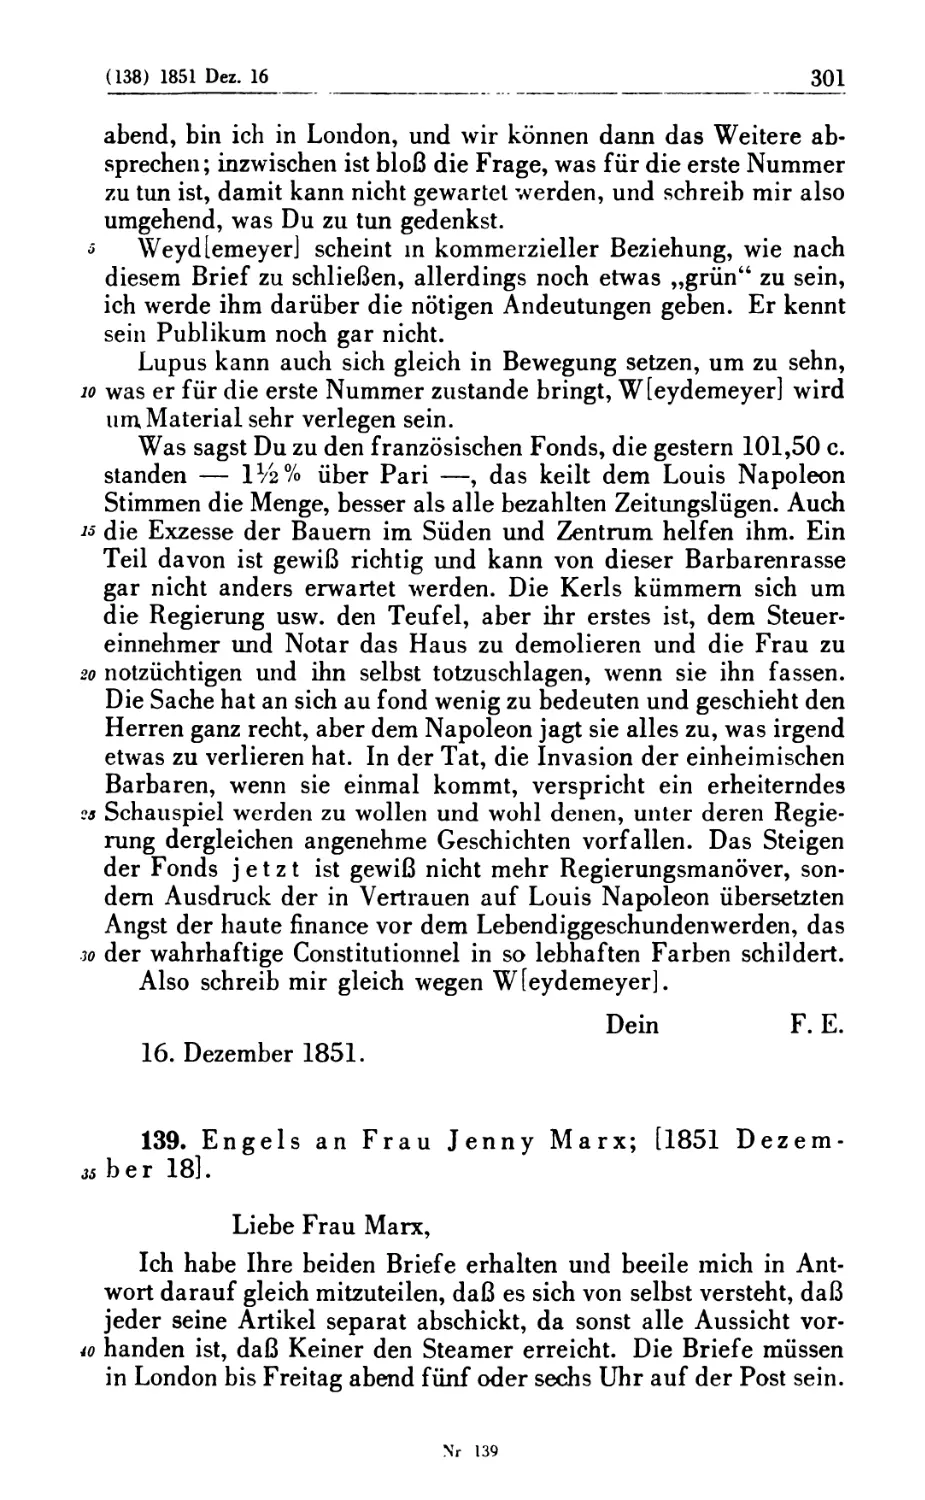 139. Engels an Frau Jenny Marx; [1851 Dezember 18]